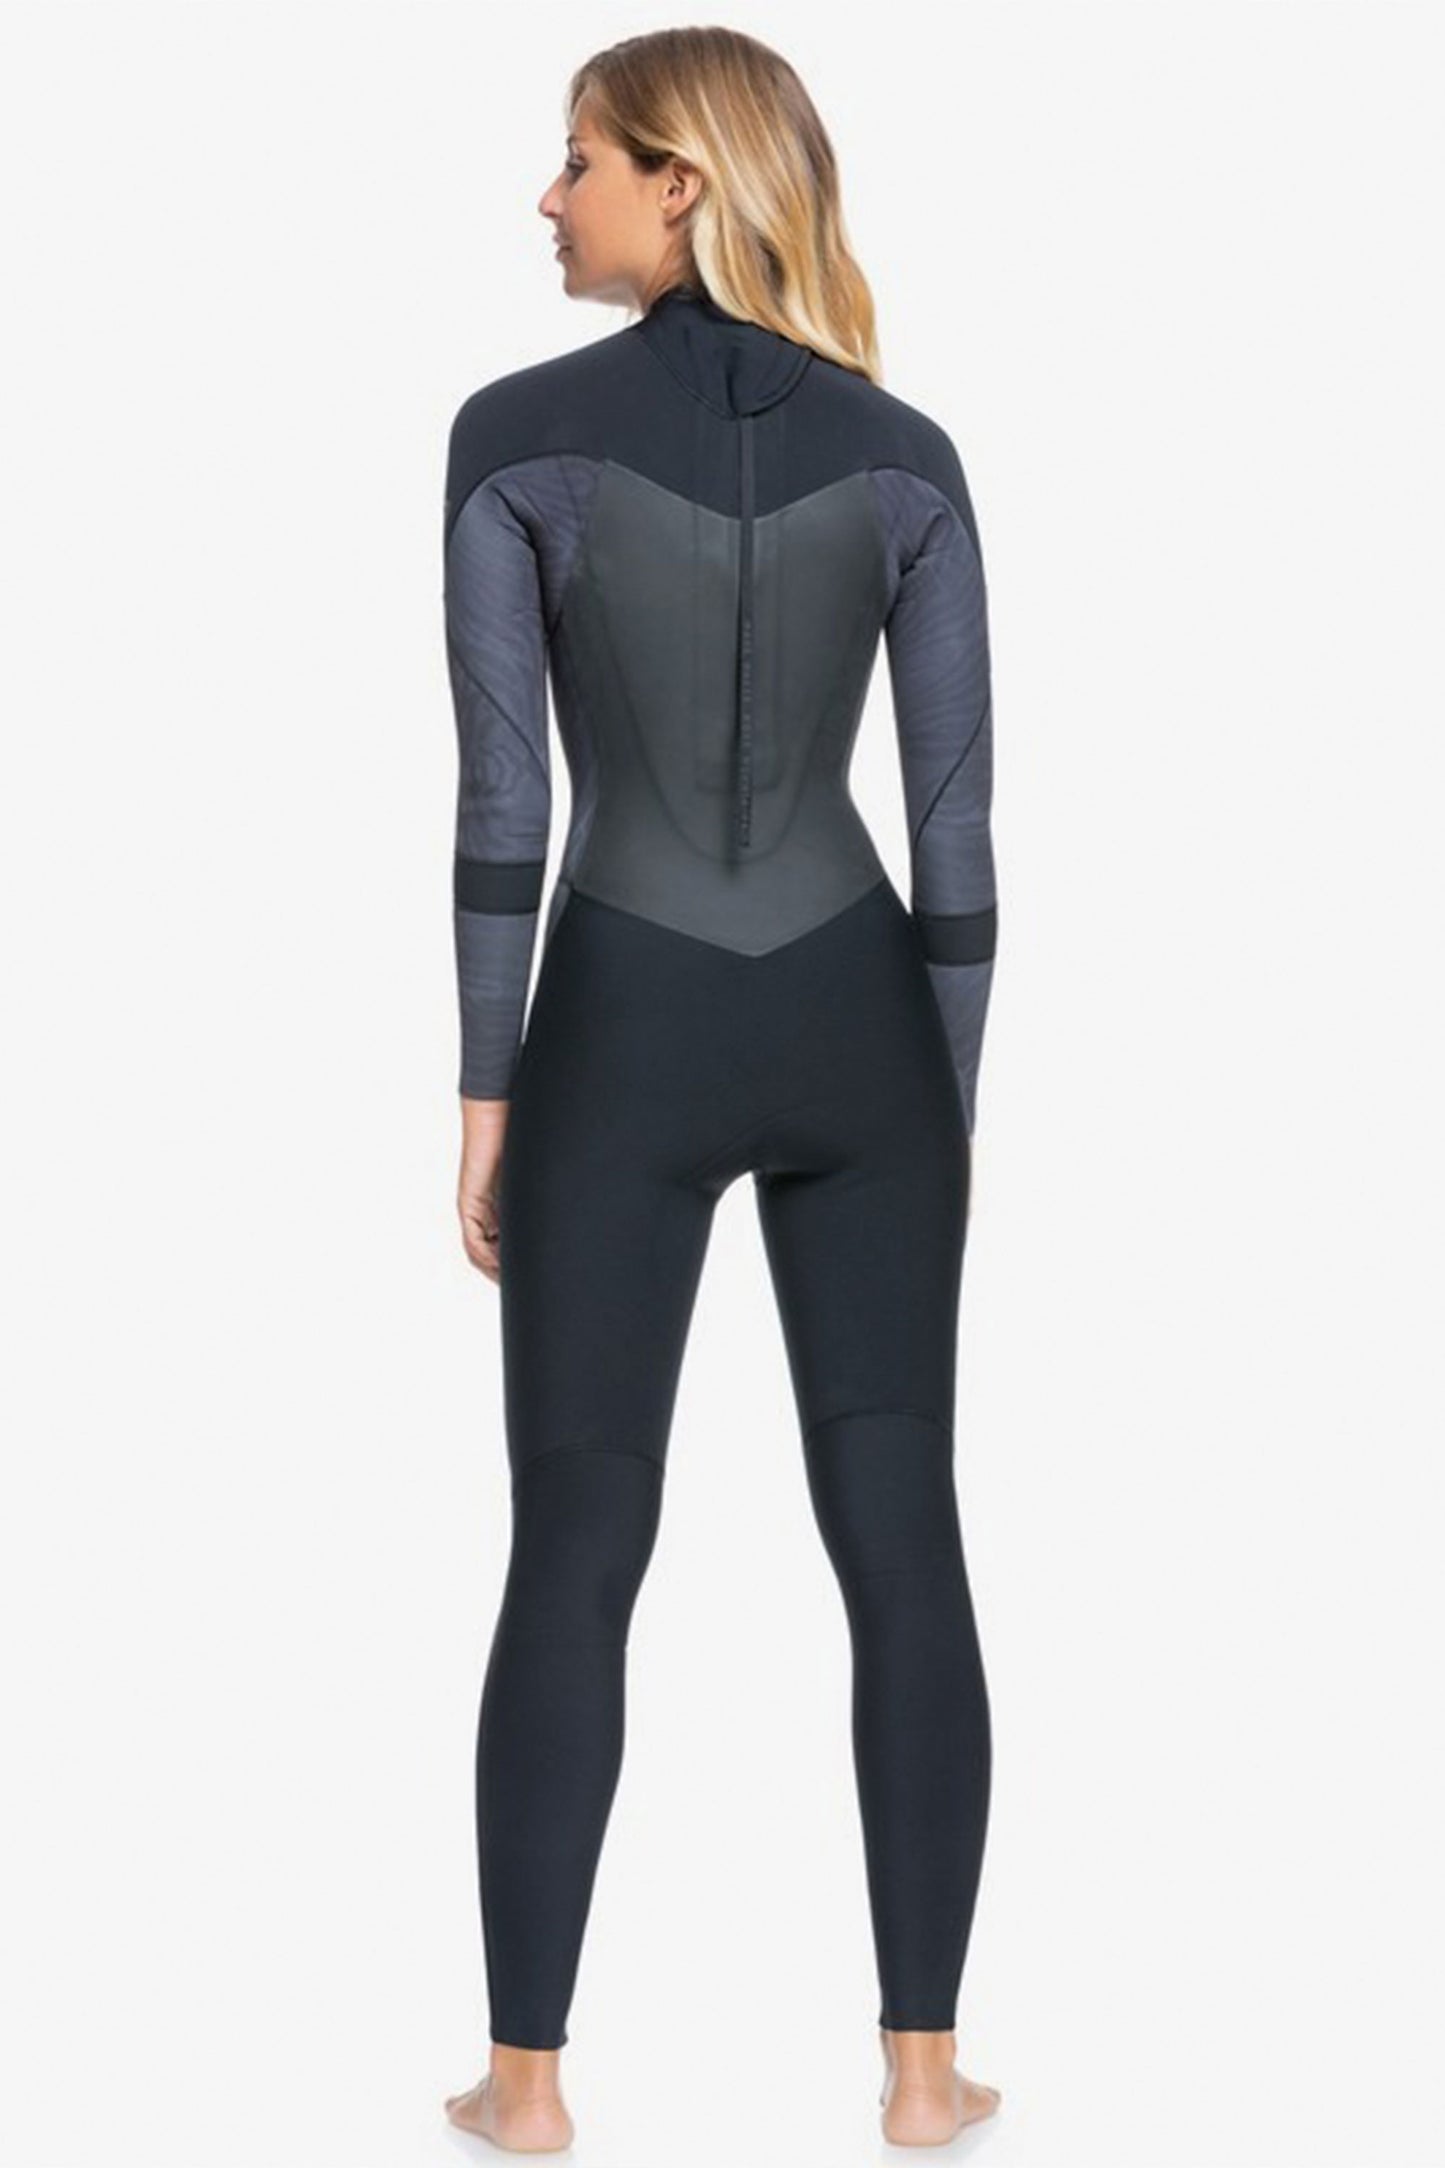 Pukas-Surf-Shop-roxy-wetsuit-Syncro-5-4-3mm-Back-Zip